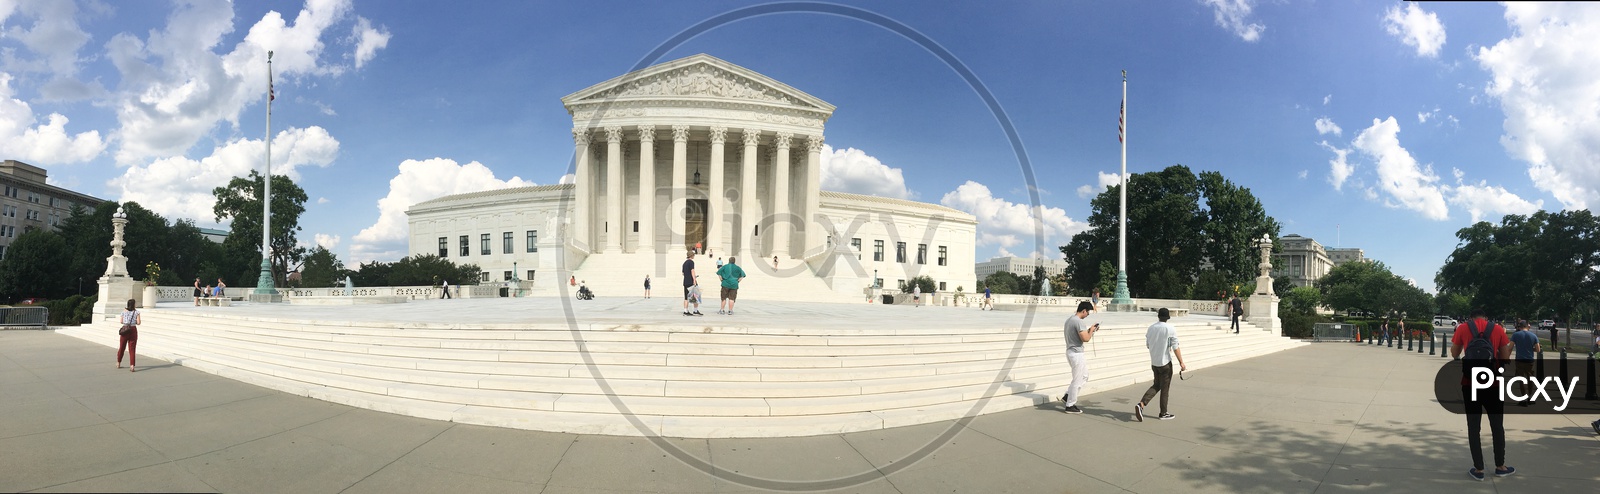 Panaroma Shot of United States Supreme Court